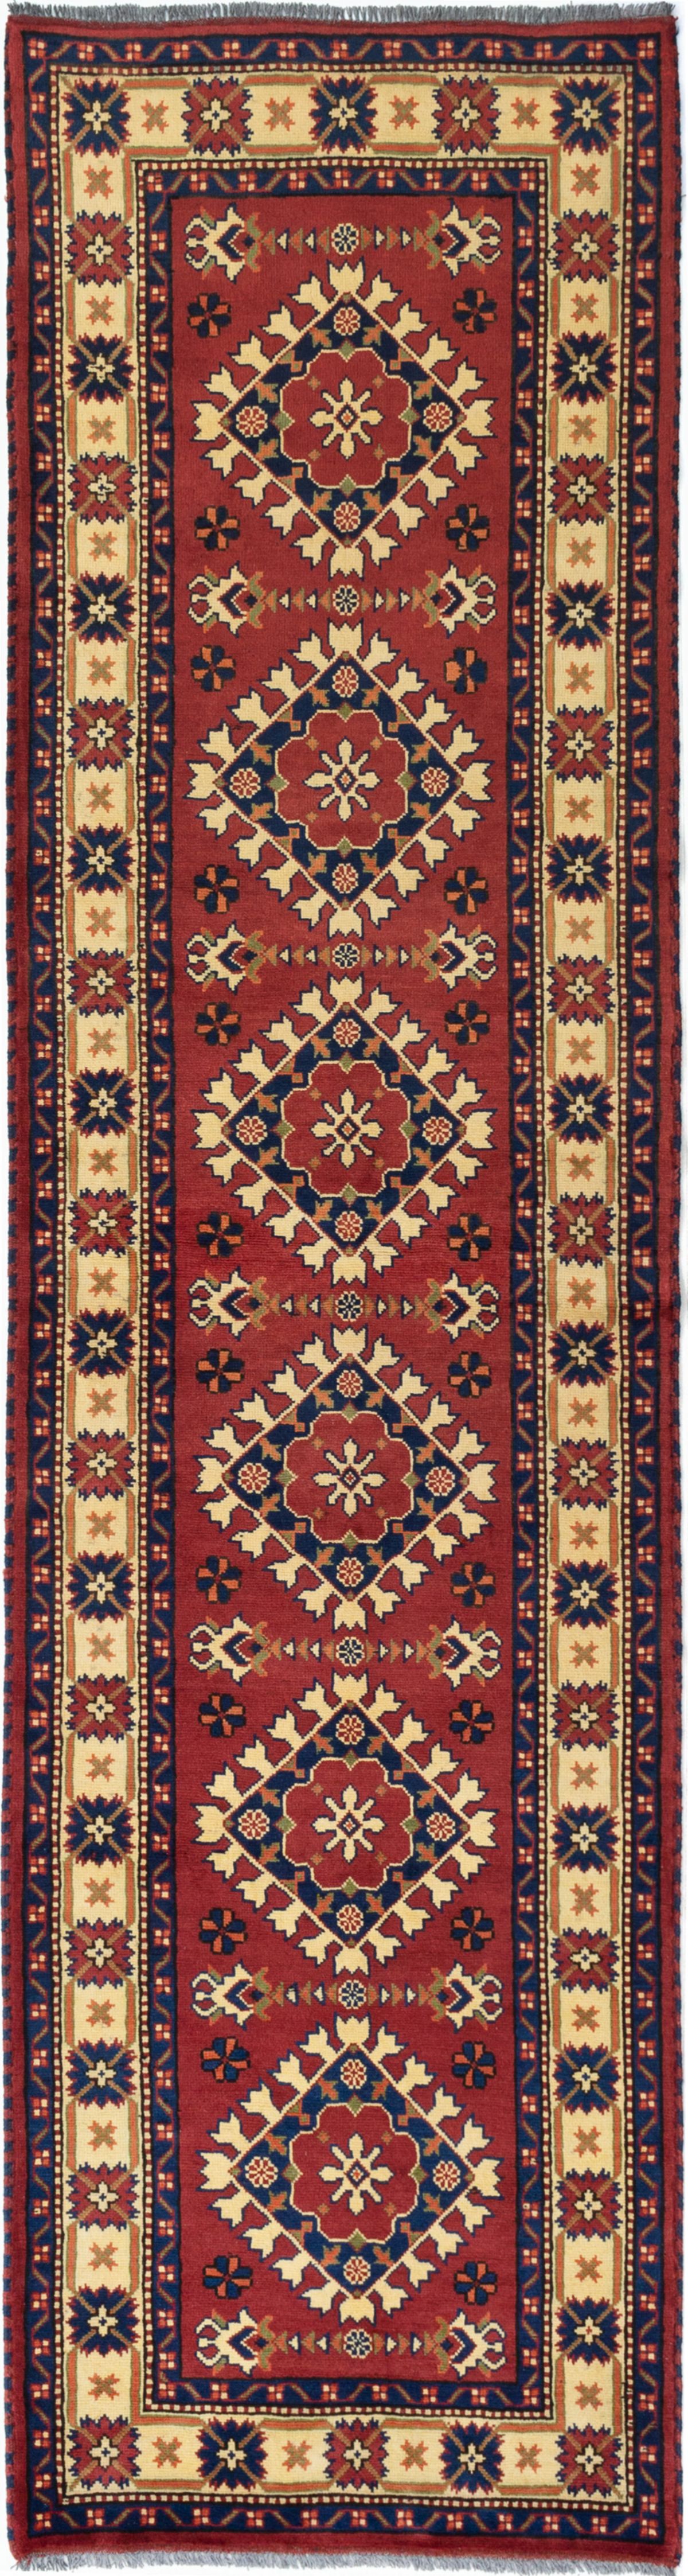 Hand-knotted Finest Kargahi Dark Red Wool Rug 2'9" x 10'10" Size: 2'9" x 10'10"  